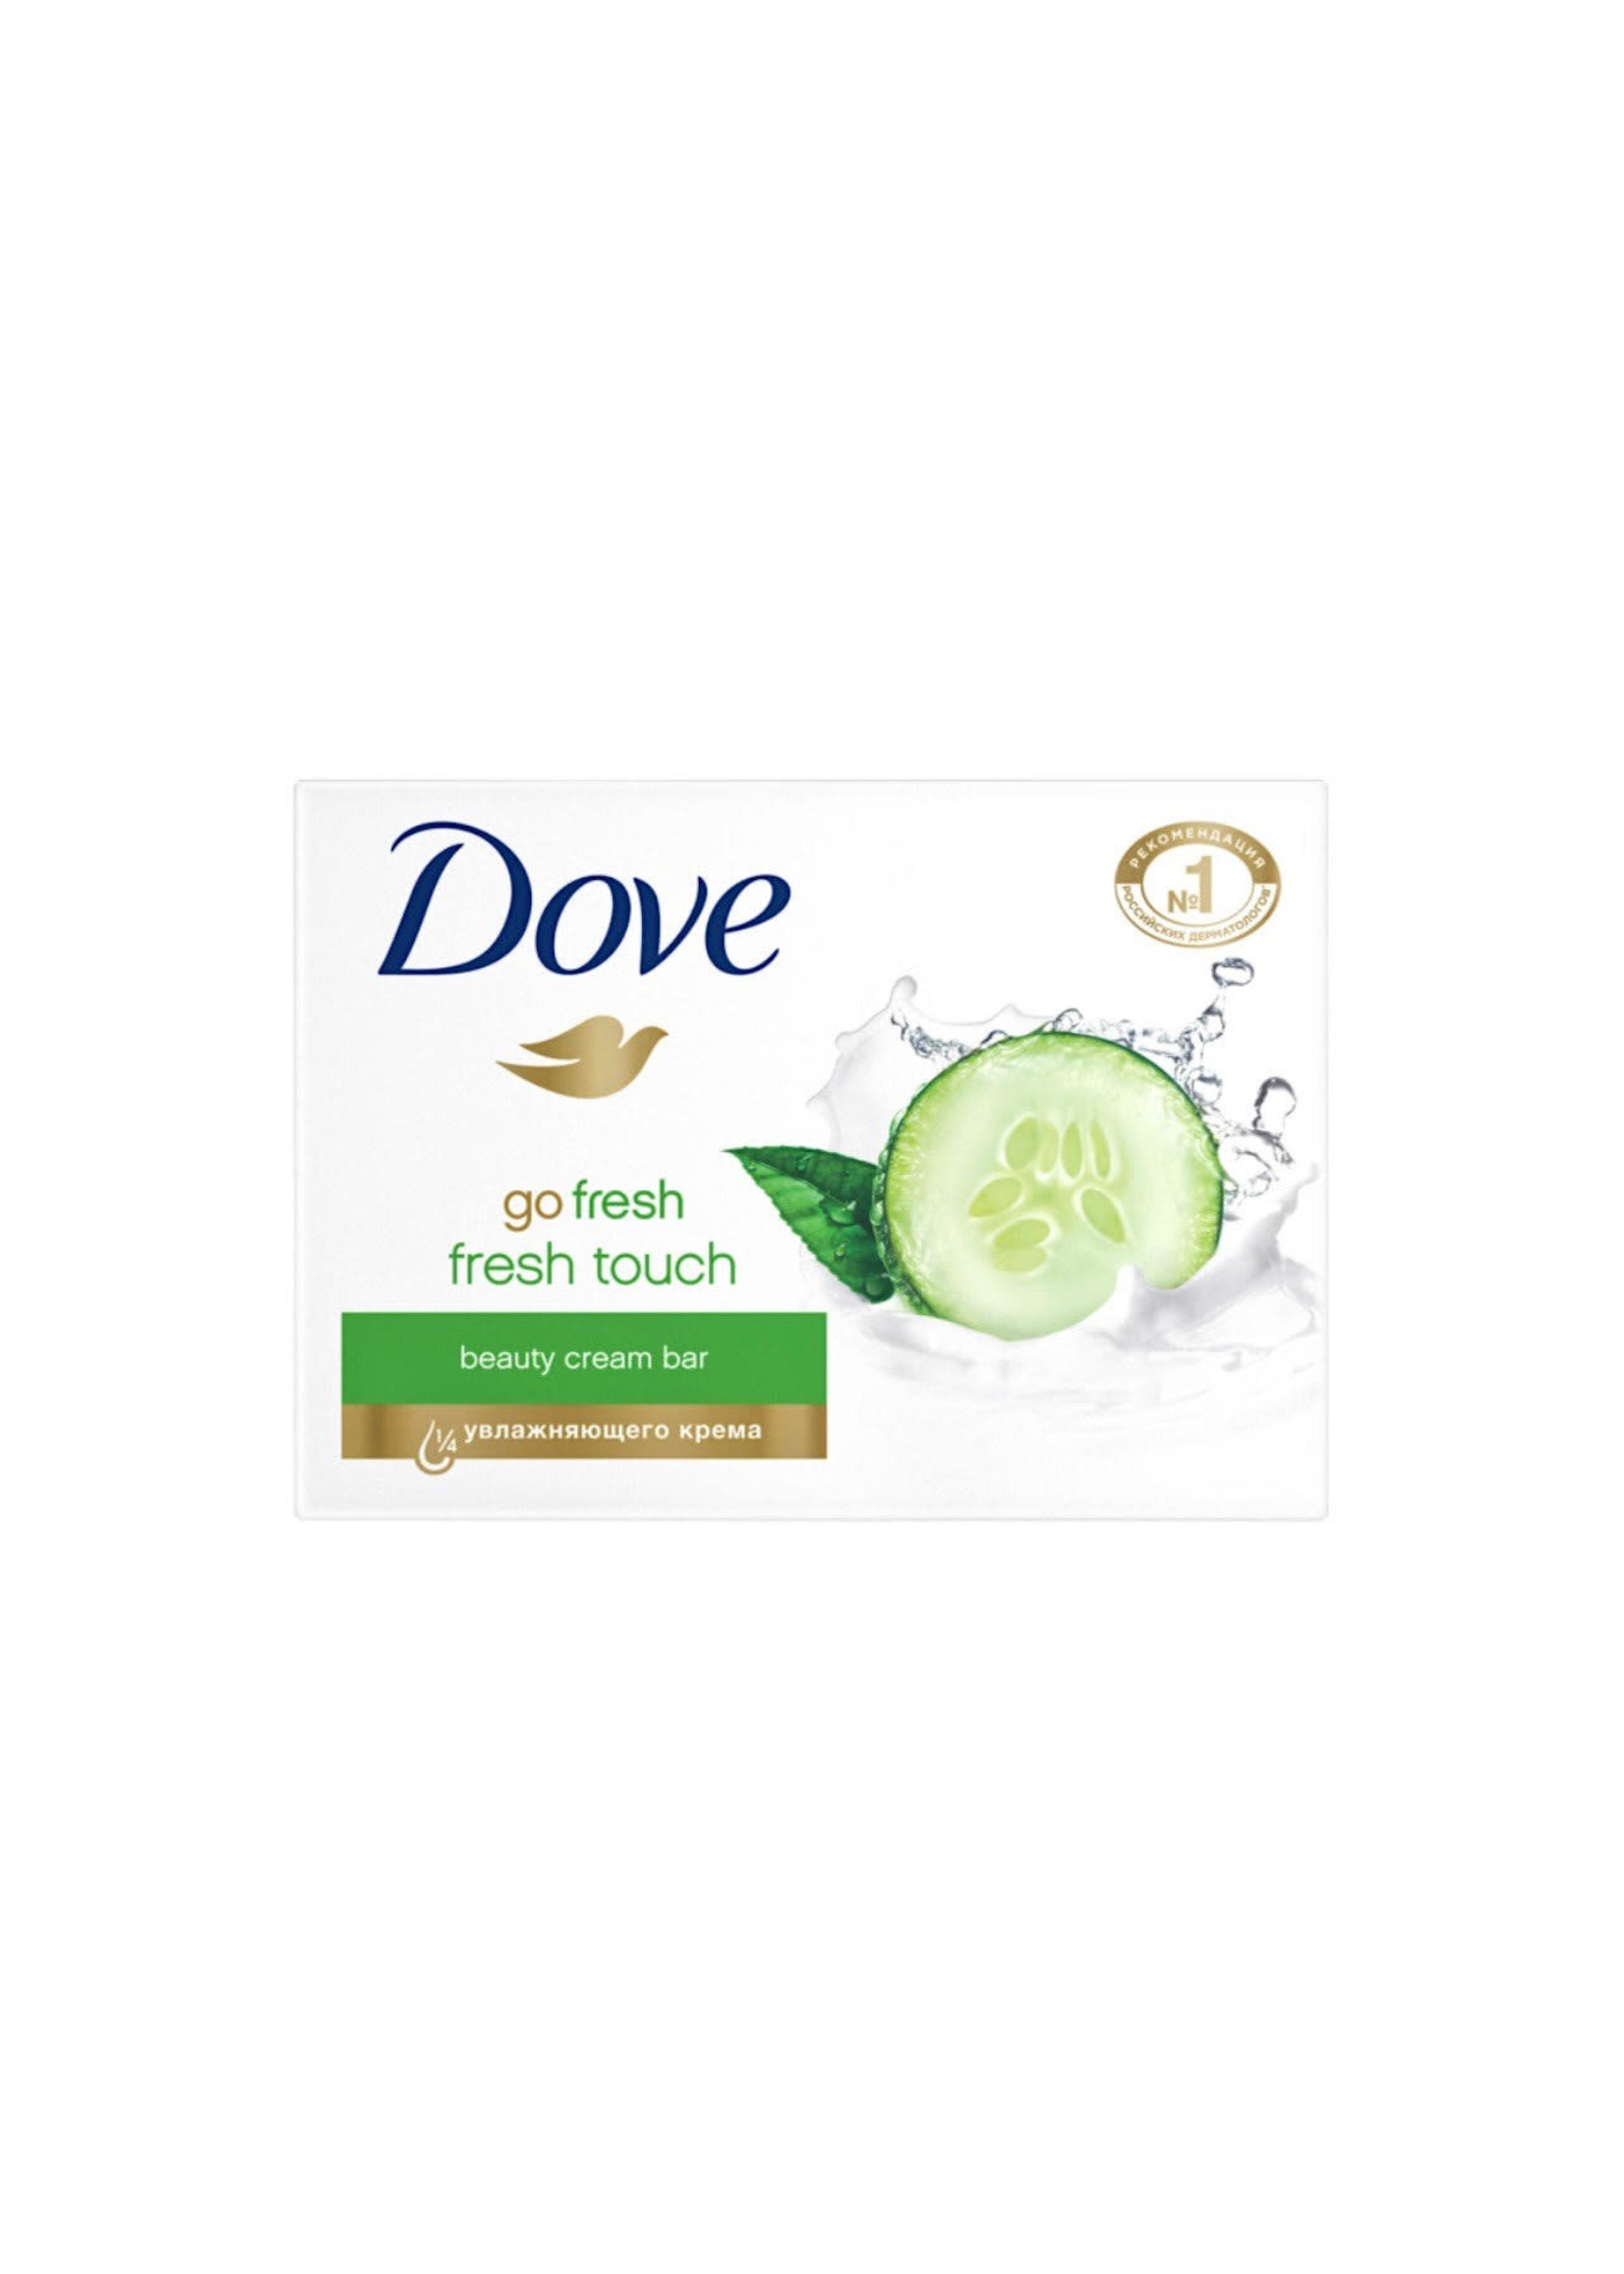 Dove Go Fresh Fresh Touch Beauty Bar 4.75oz - 48/case ($37.92)